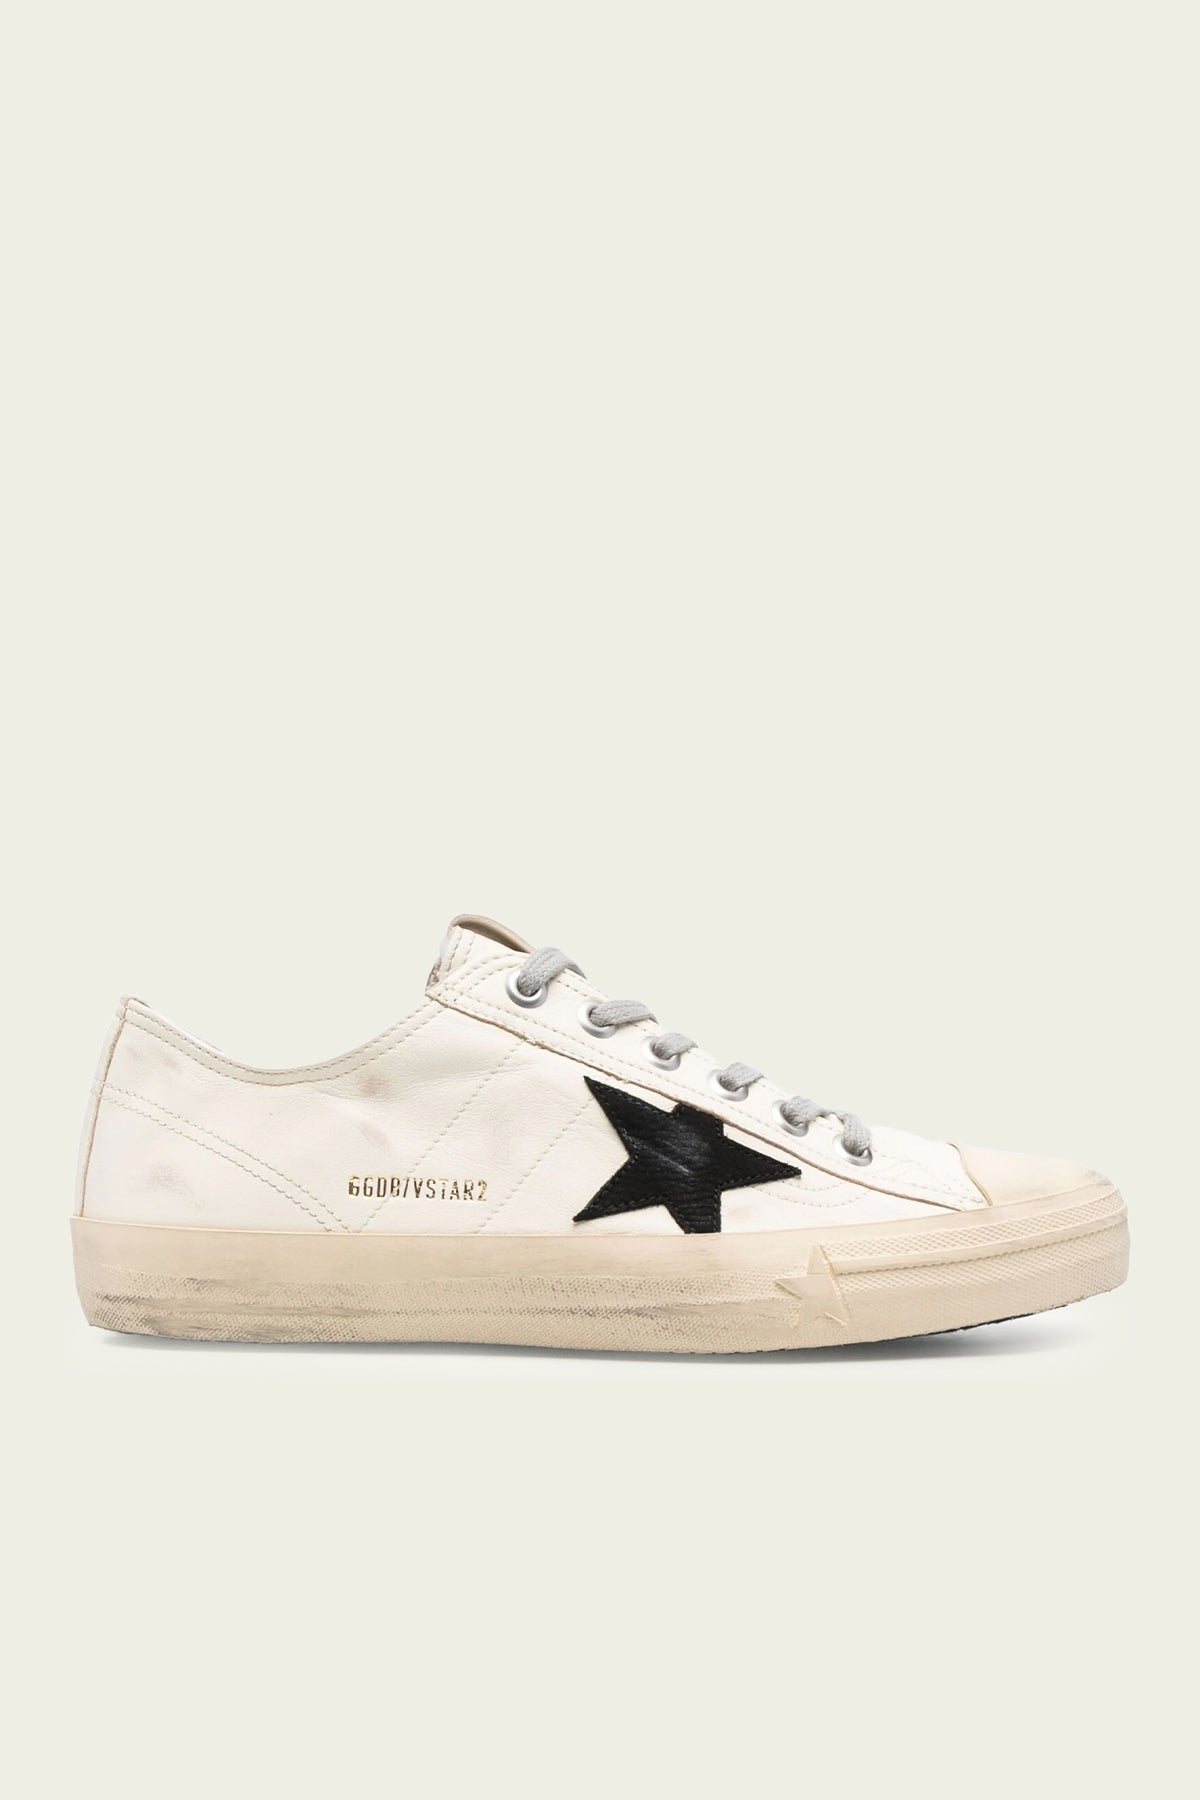 V-Star Dirty White Black Star Leather Men Sneaker - shop-olivia.com